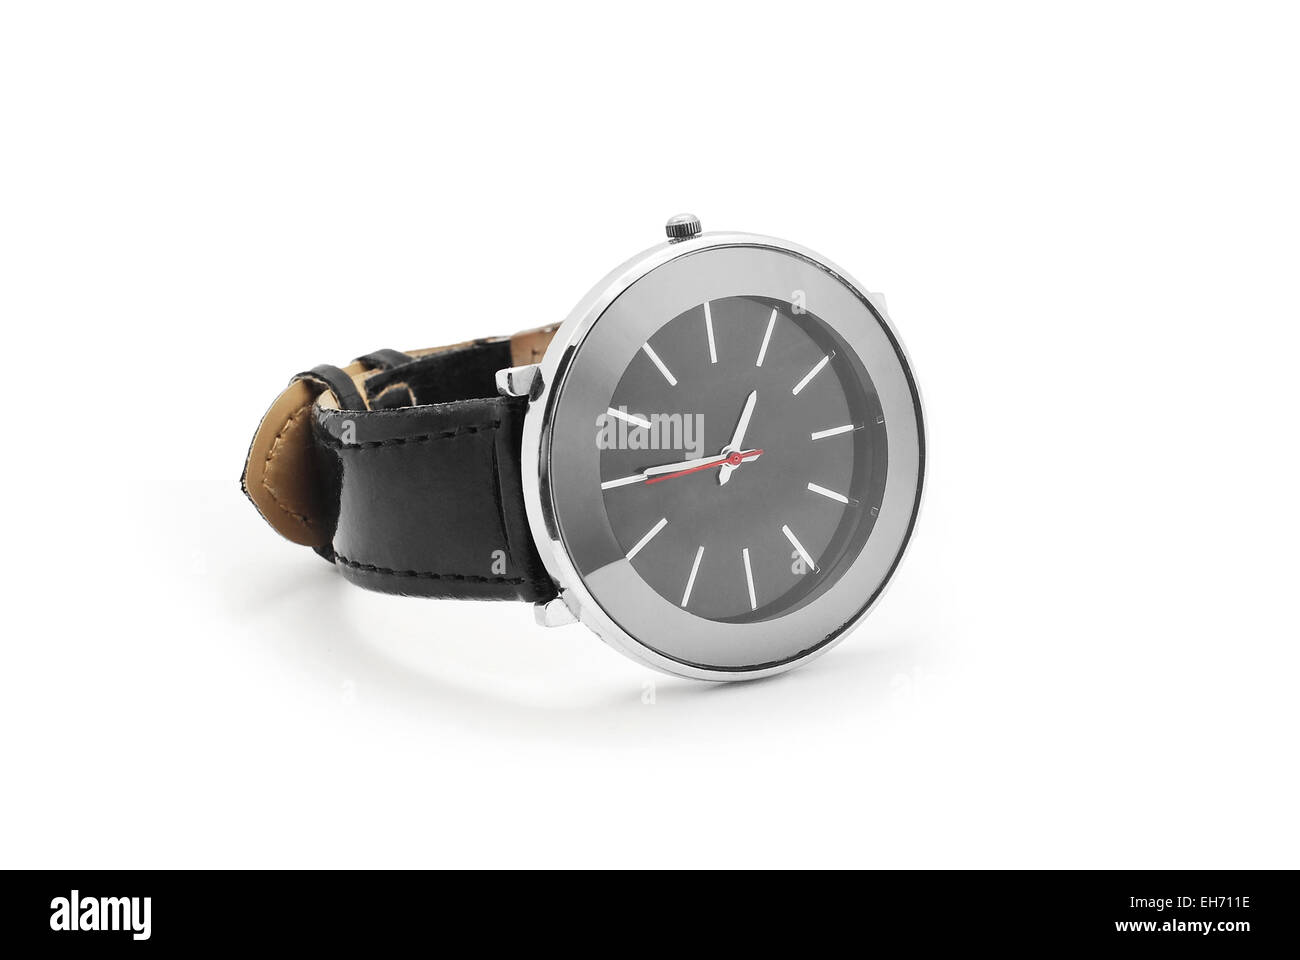 wrist watch on white background Stock Photo